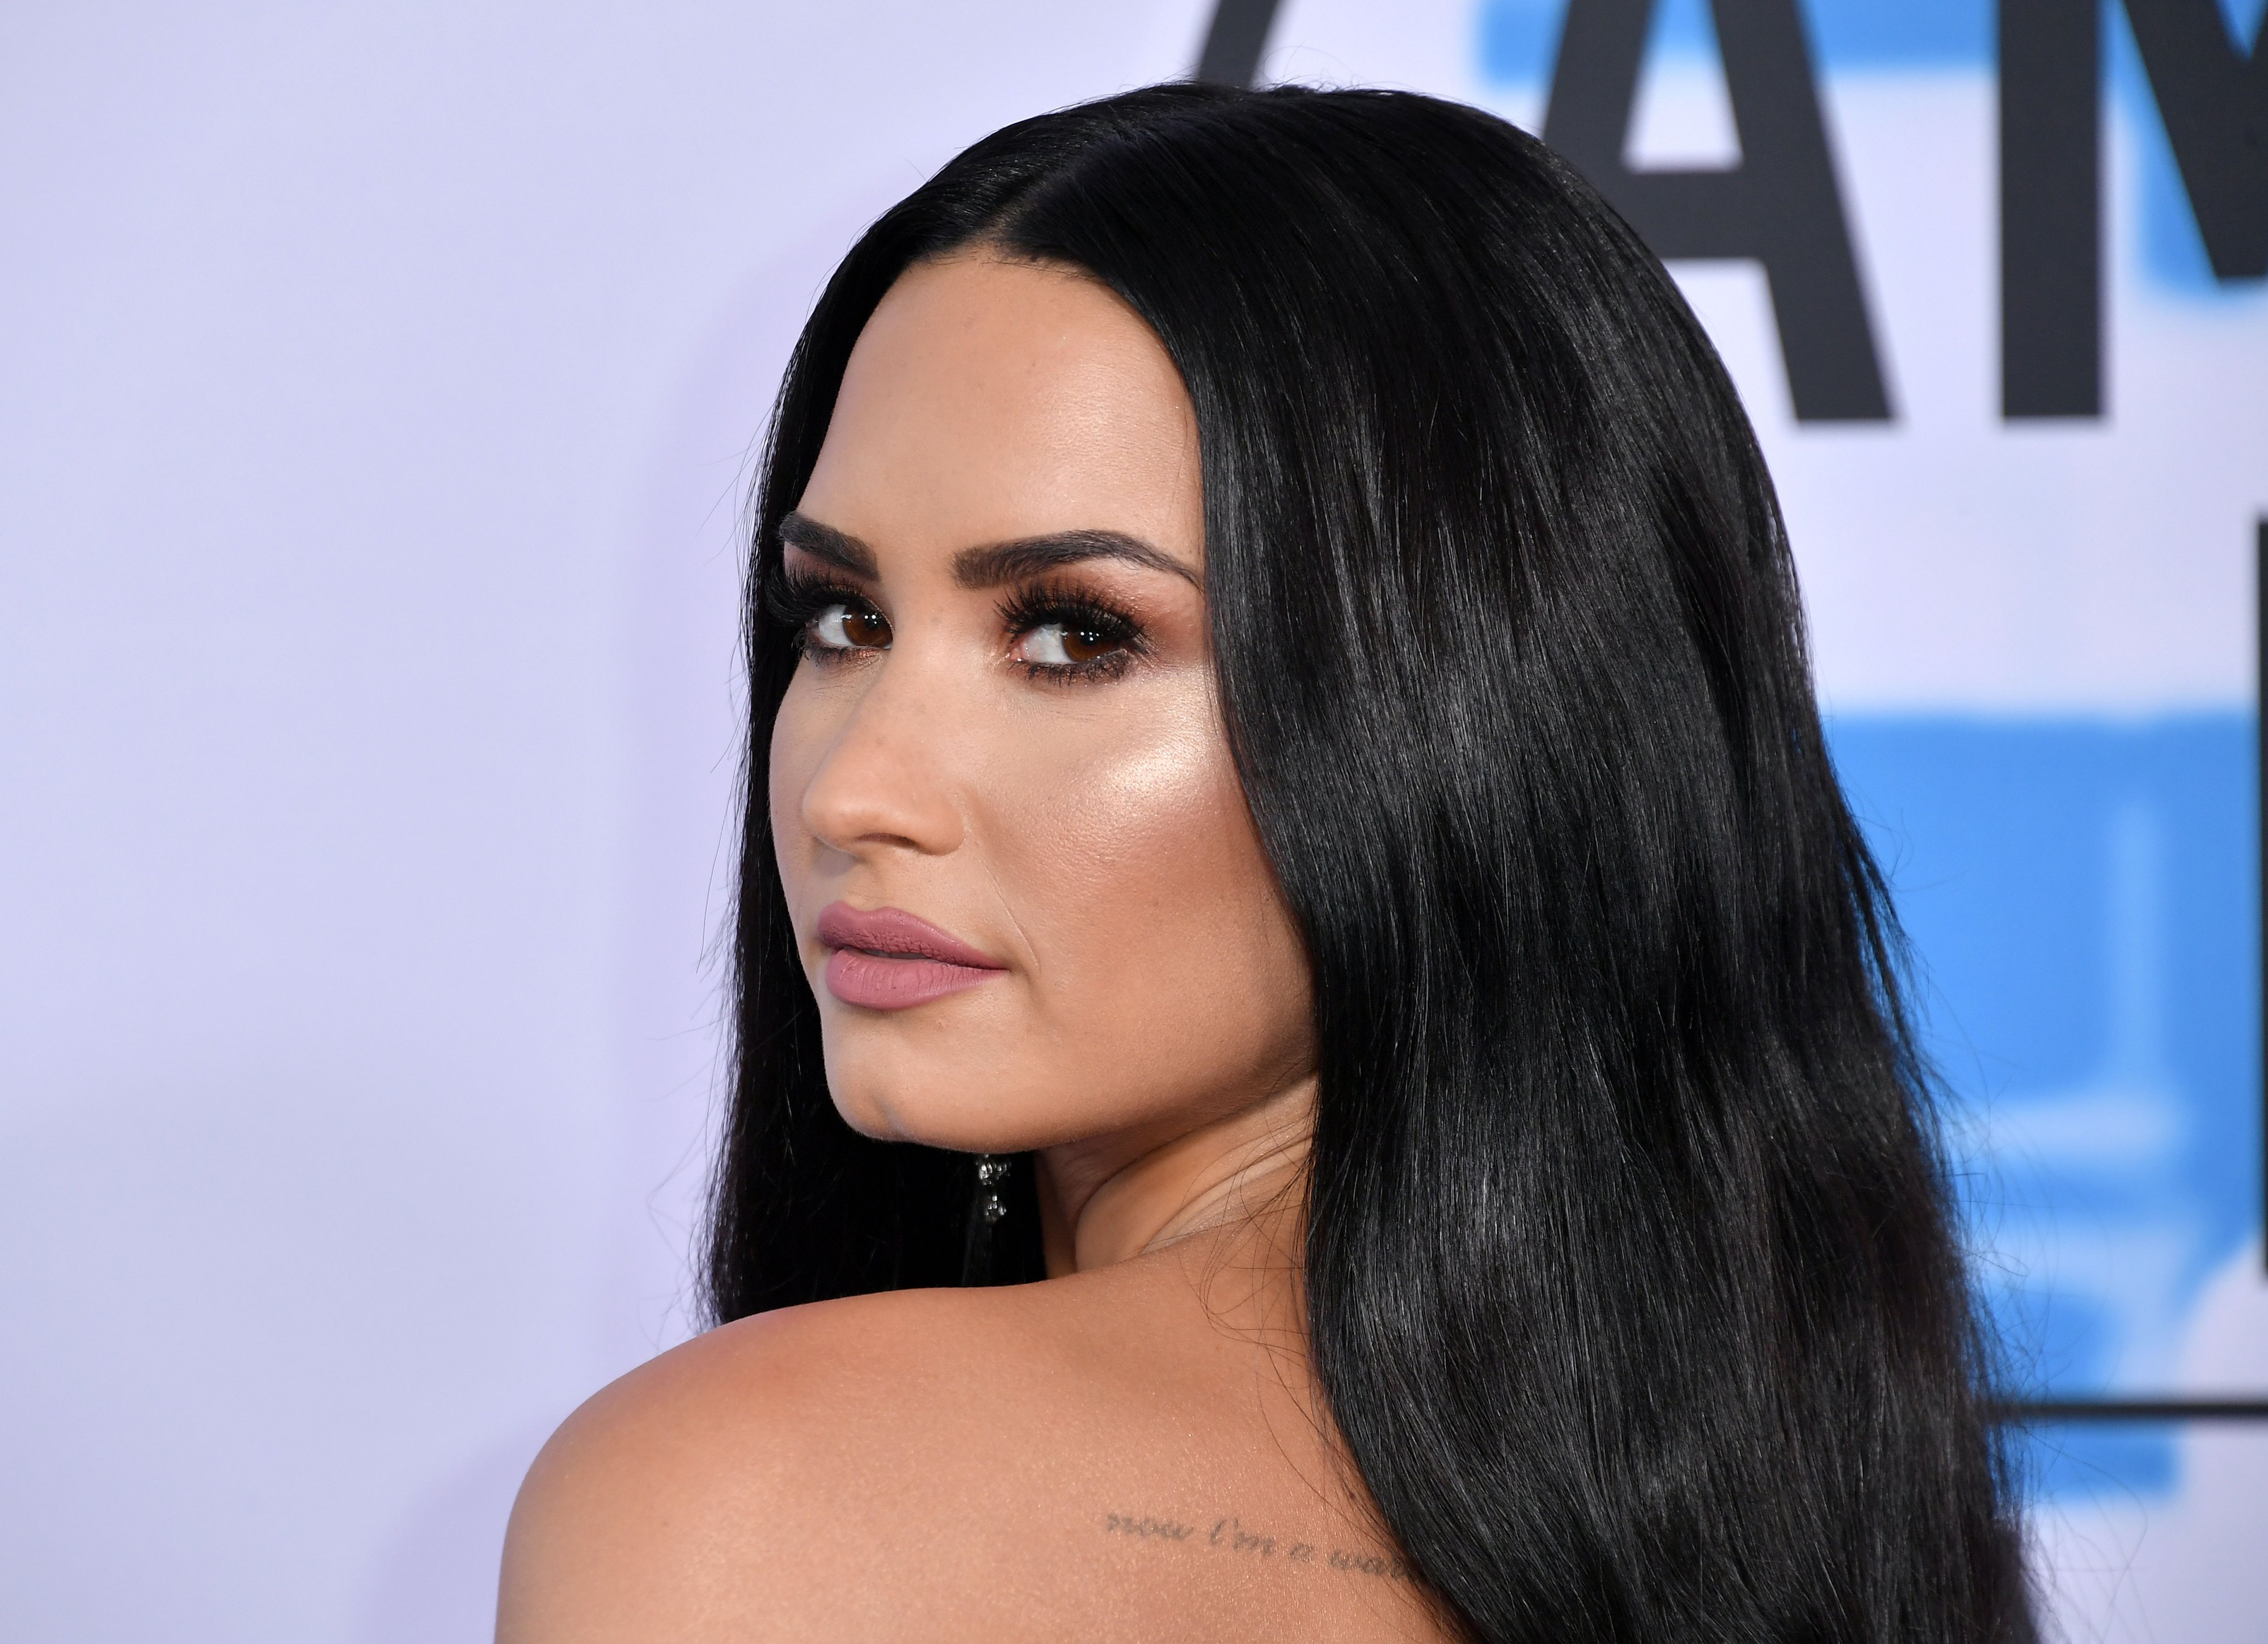 6. Demi Lovato's Blue Highlights on Short Hair - wide 9